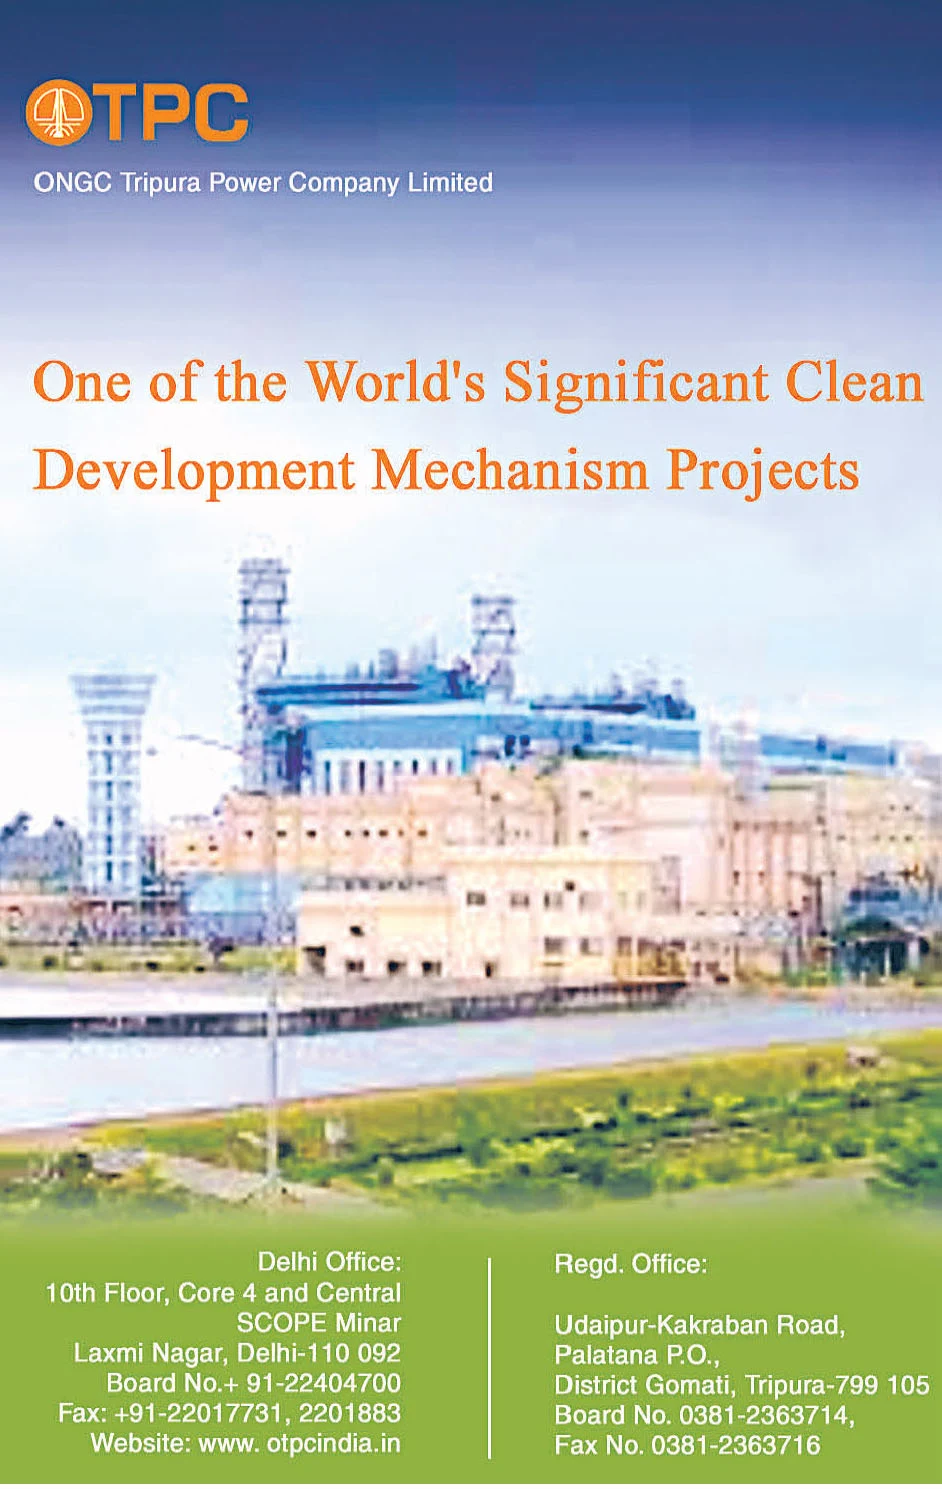 ONGC Tripura Power Company Promotes Clean Development Mechanism